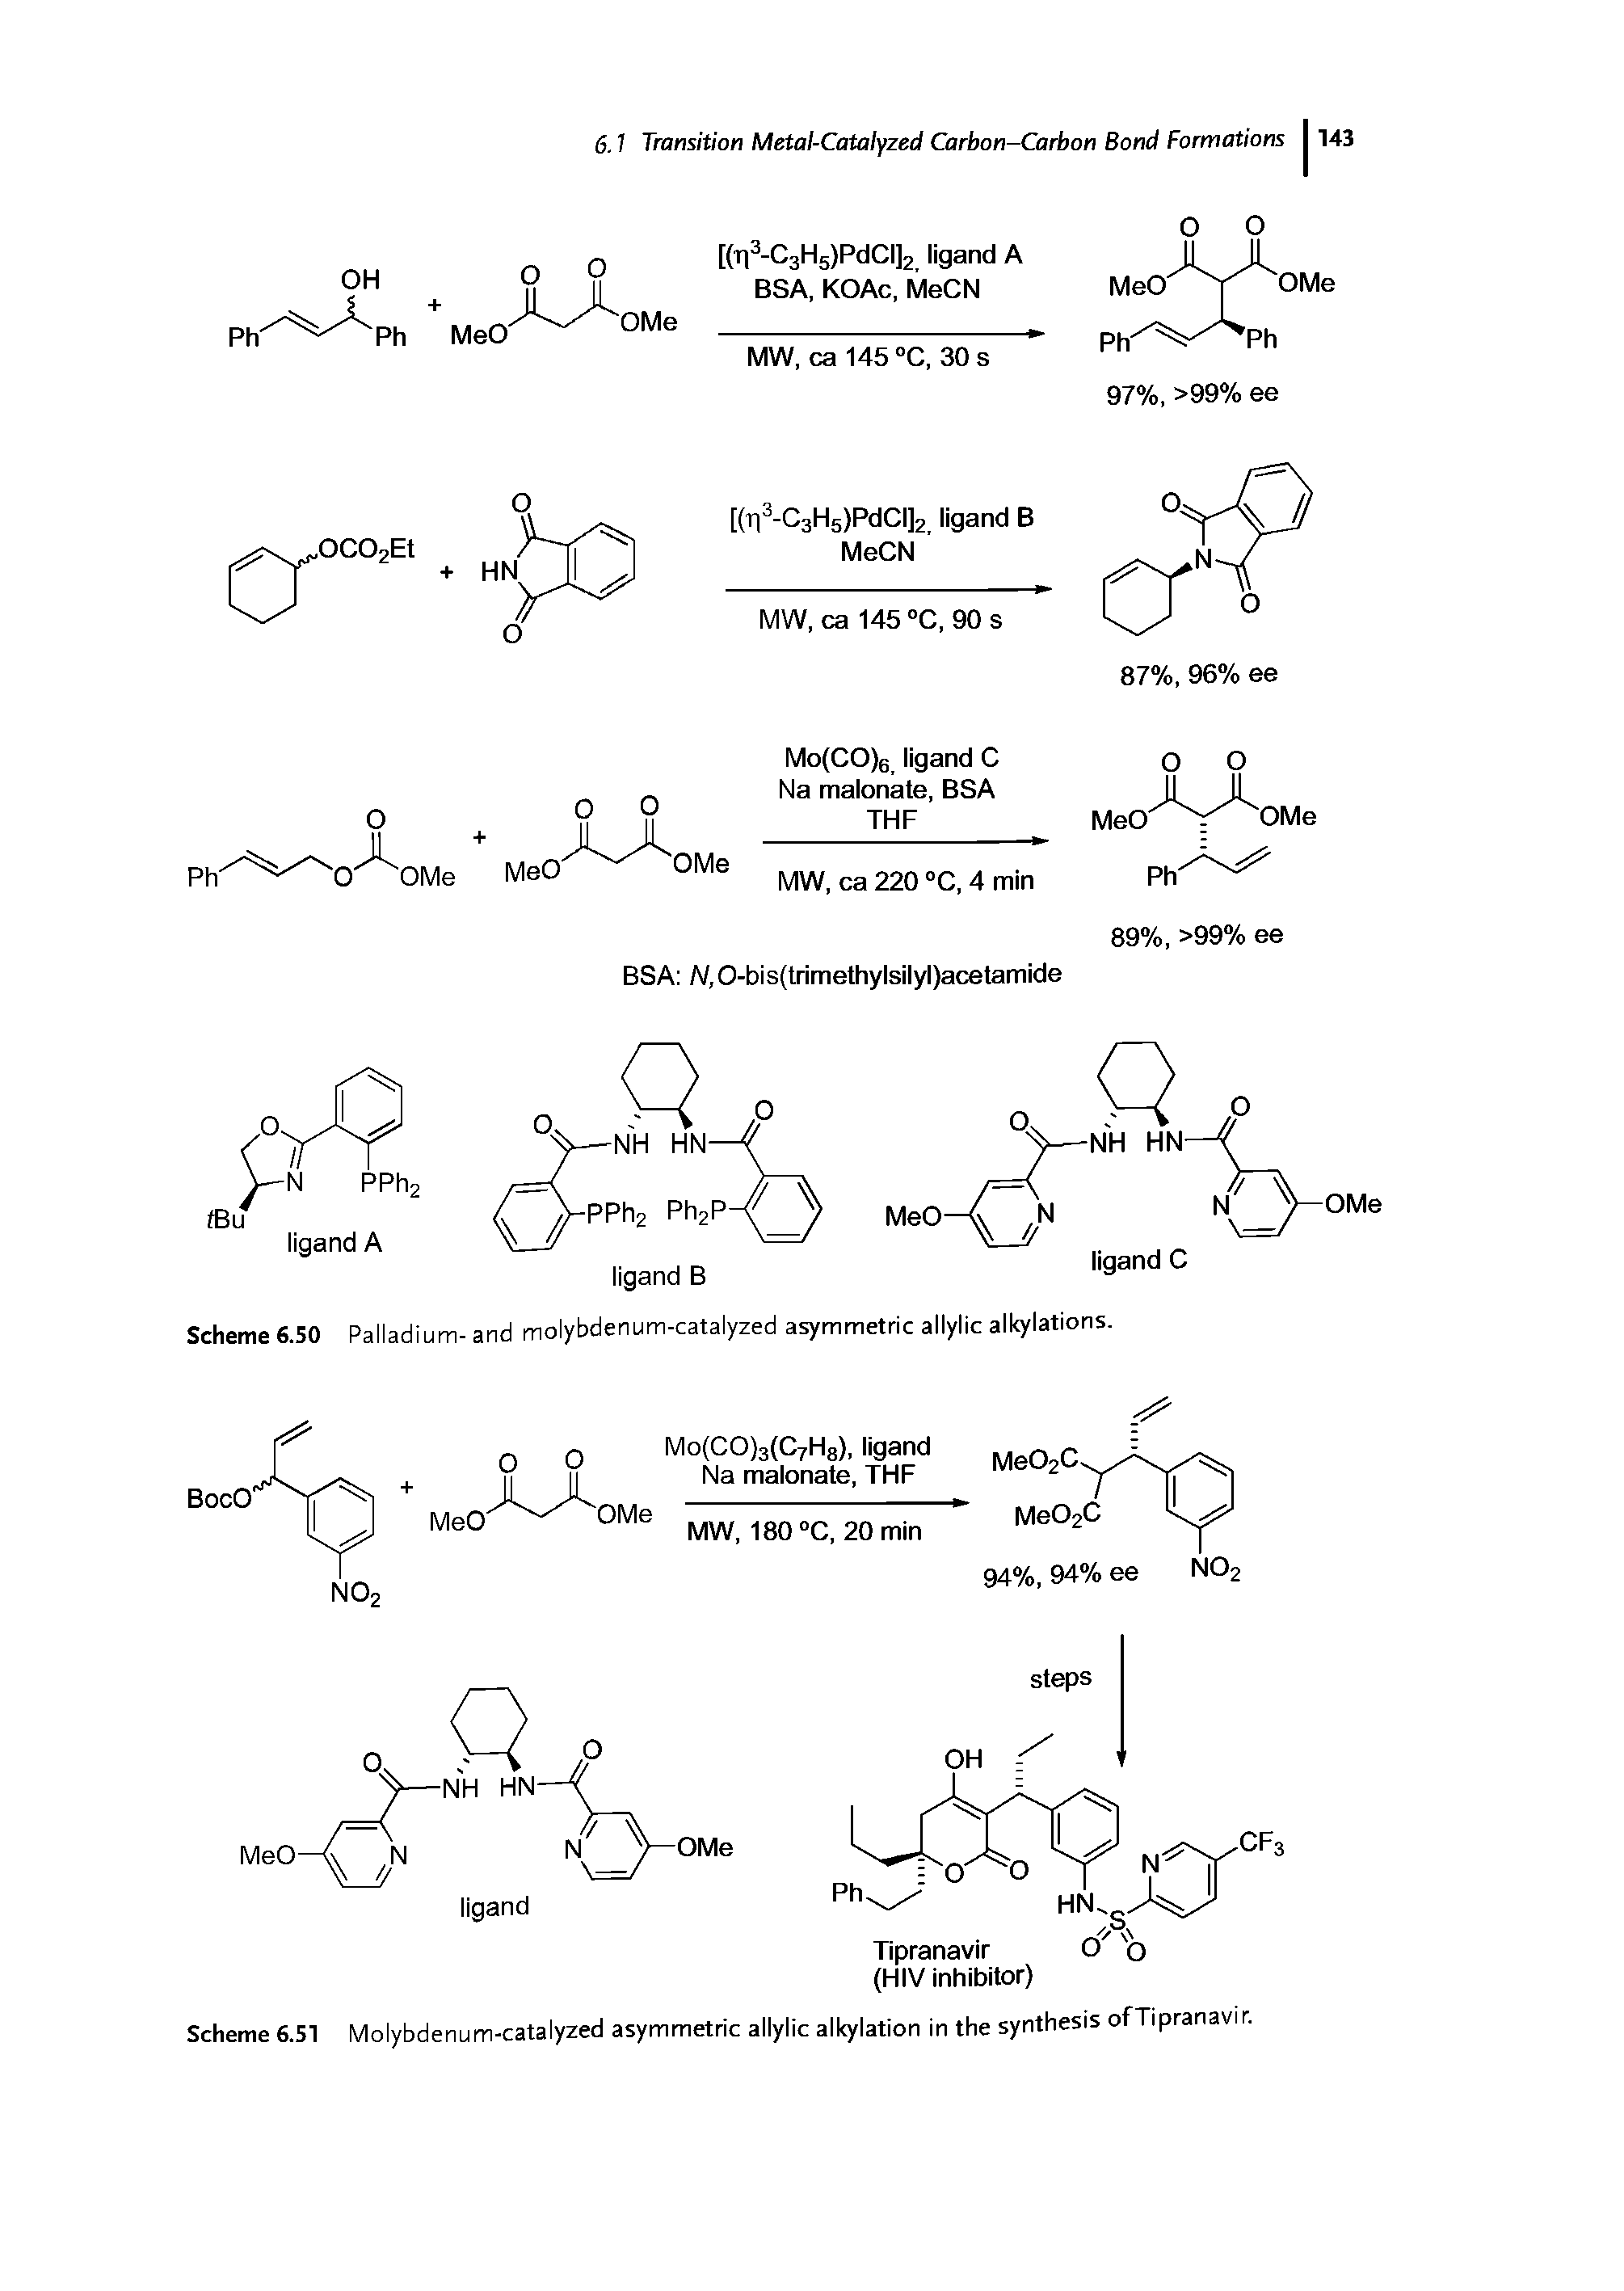 Scheme 6.51 Molybdenum-catalyzed asymmetric allylic alkylation in the synthesis ofTipranavir.